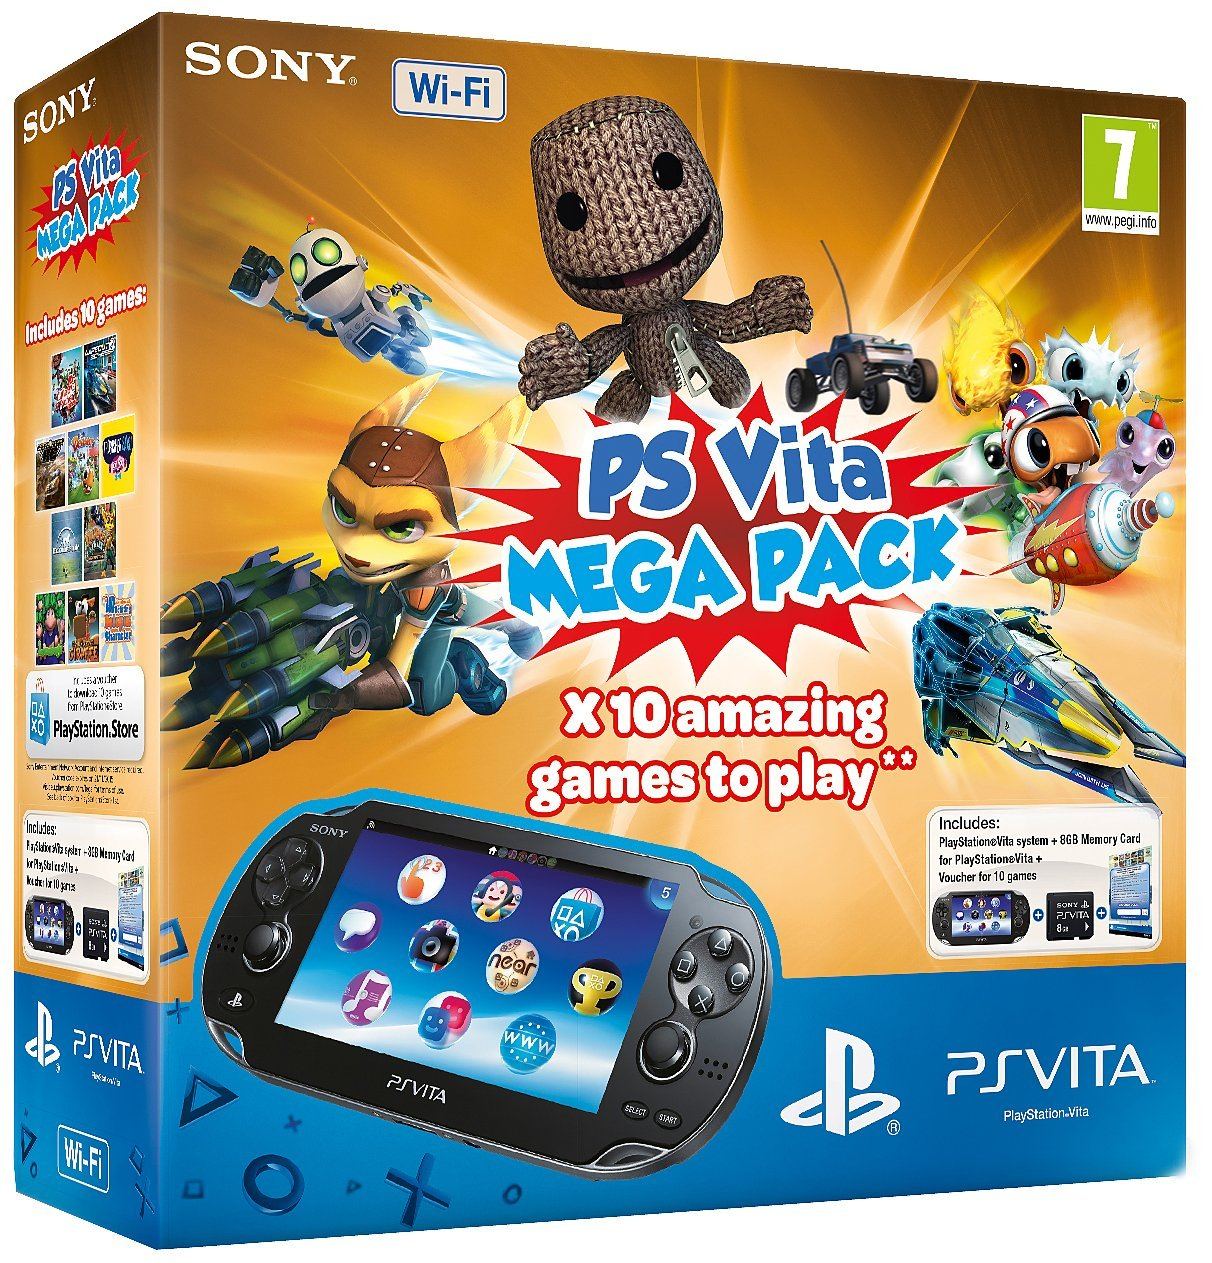 Vores firma terning uhyre PS Vita PlayStation Vita - Mega Pack Wi-Fi Model (Black)